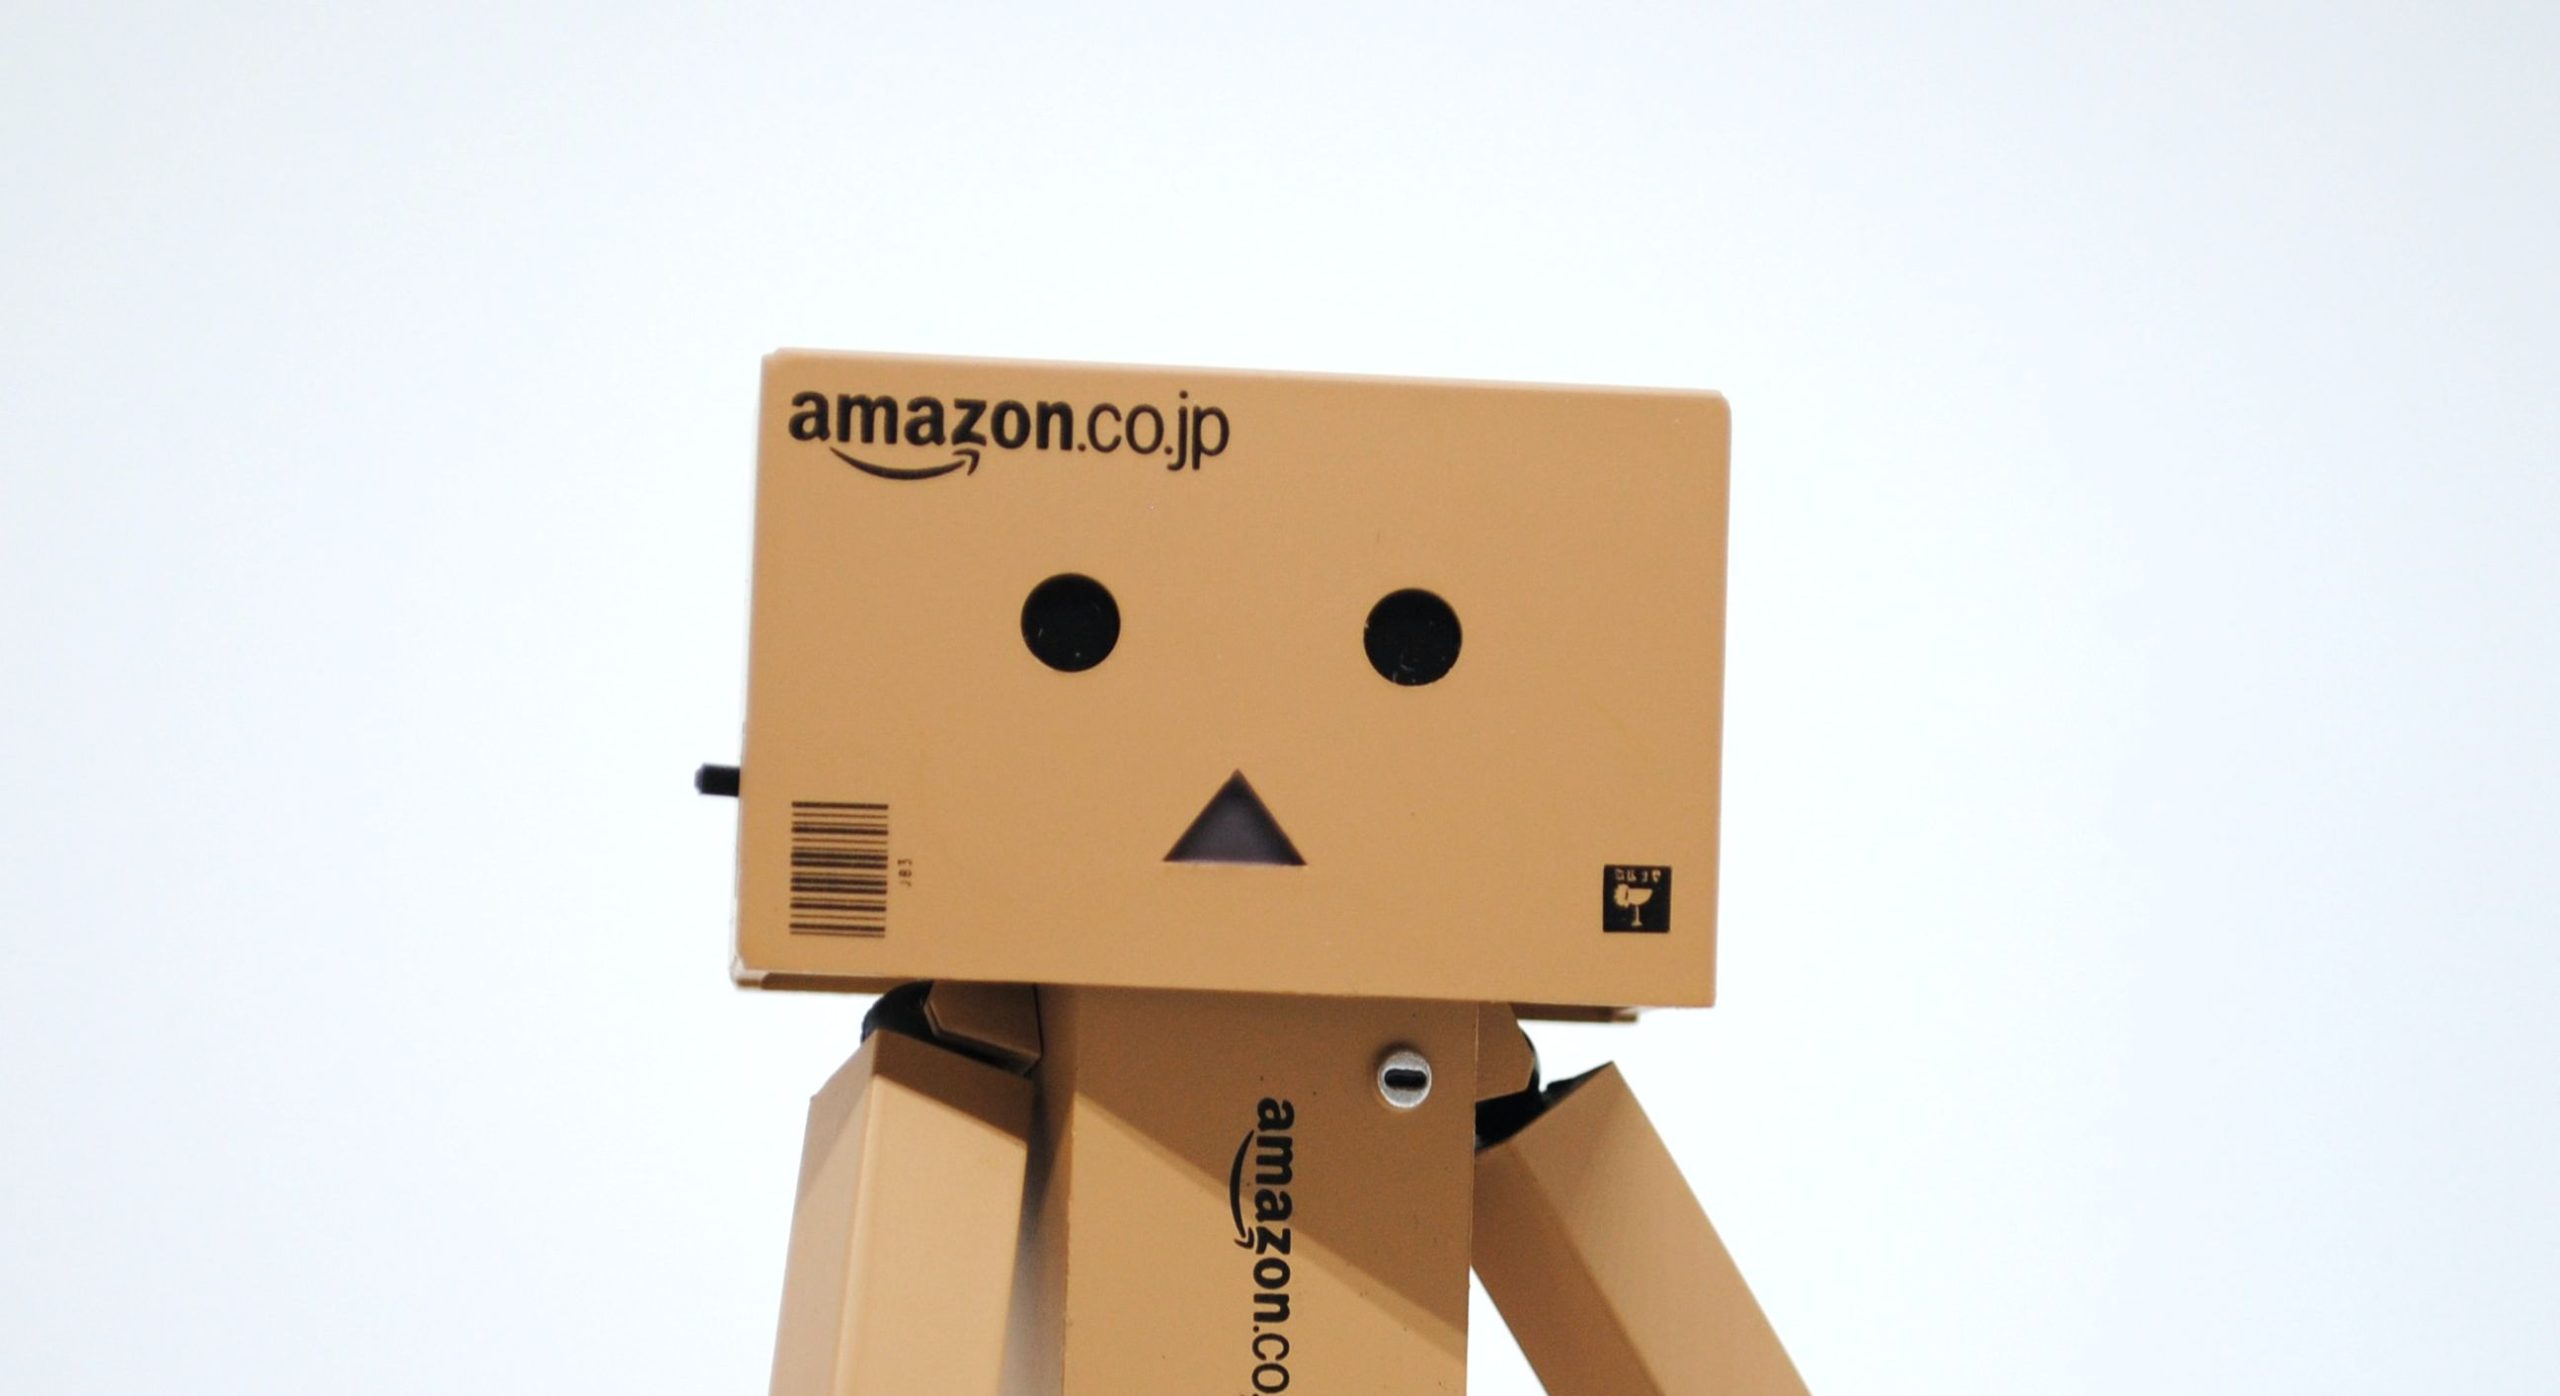 Amazon tapte en pakke på 1.4 milliarder dollar